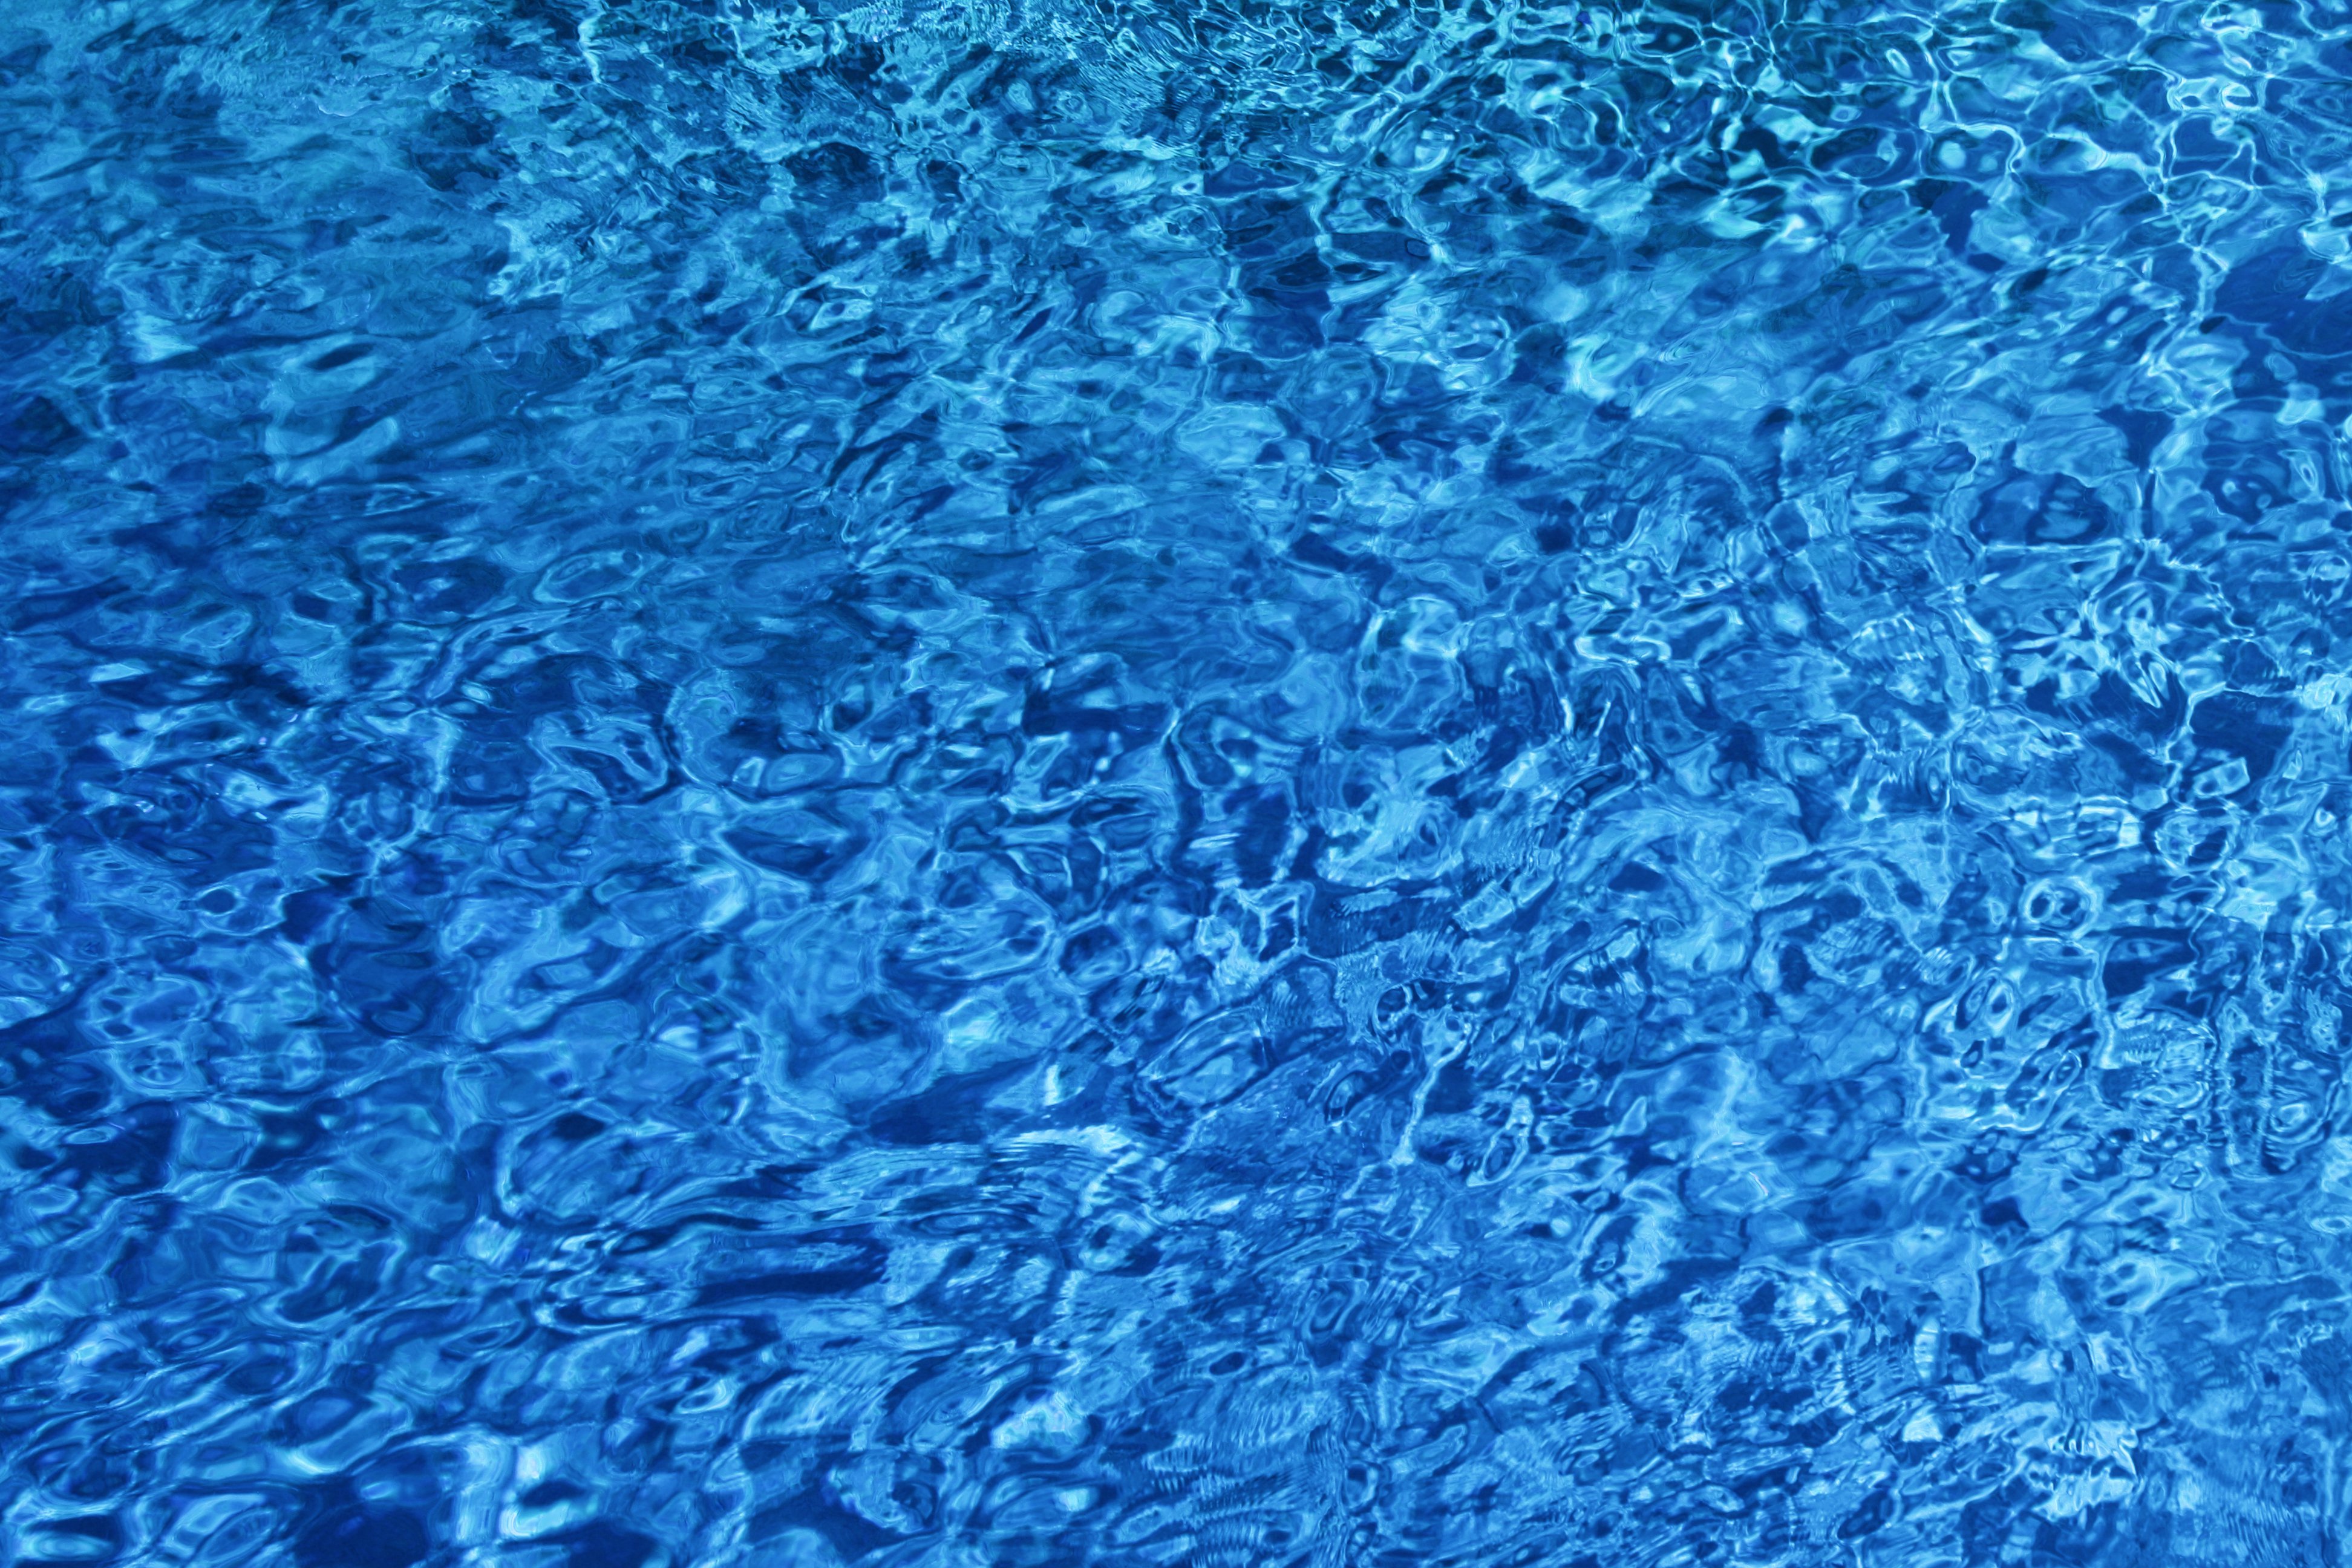 https://www.photos-public-domain.com/wp-content/uploads/2012/04/blue-water.jpg